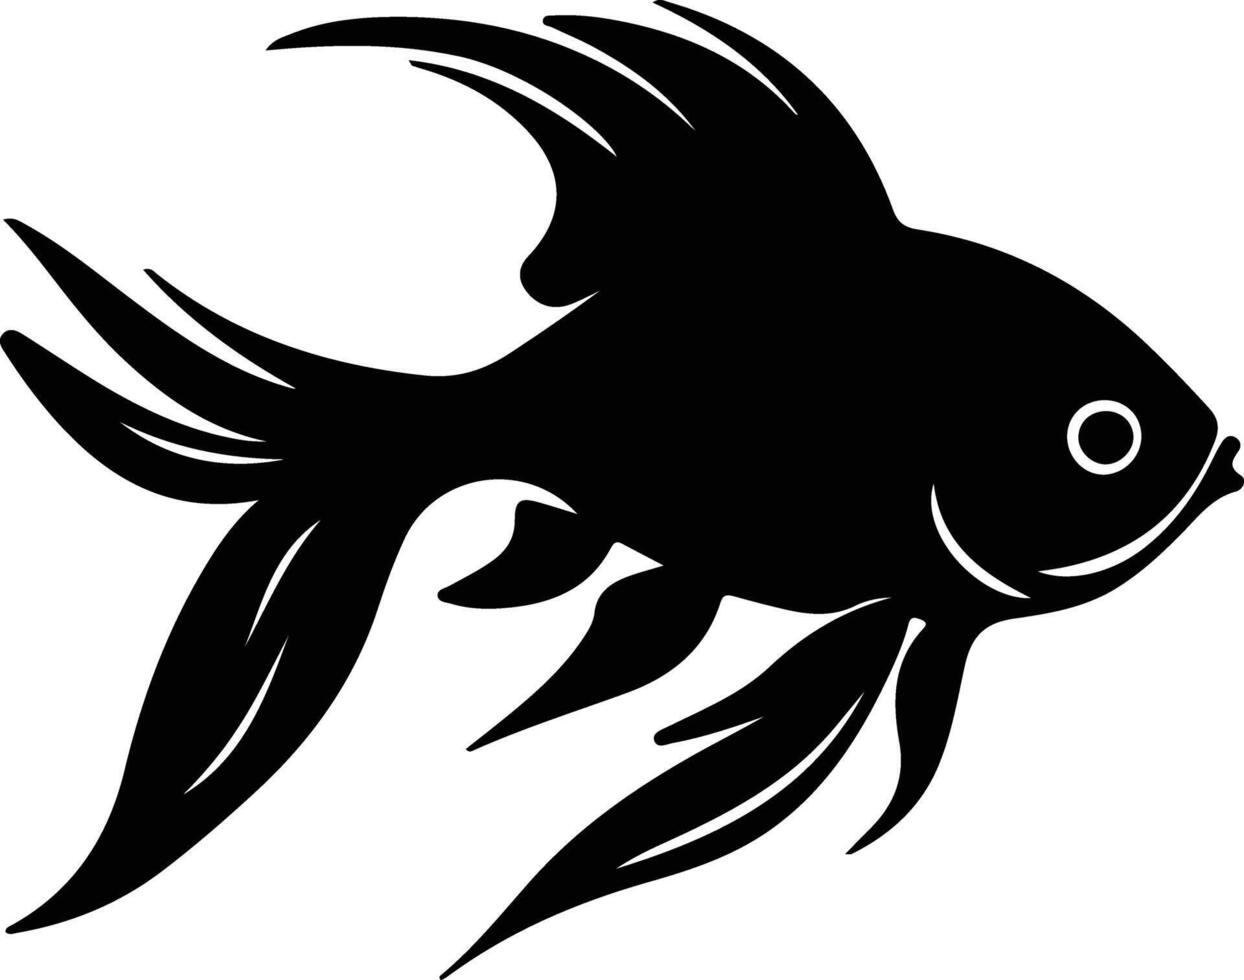 goldfish black silhouette vector